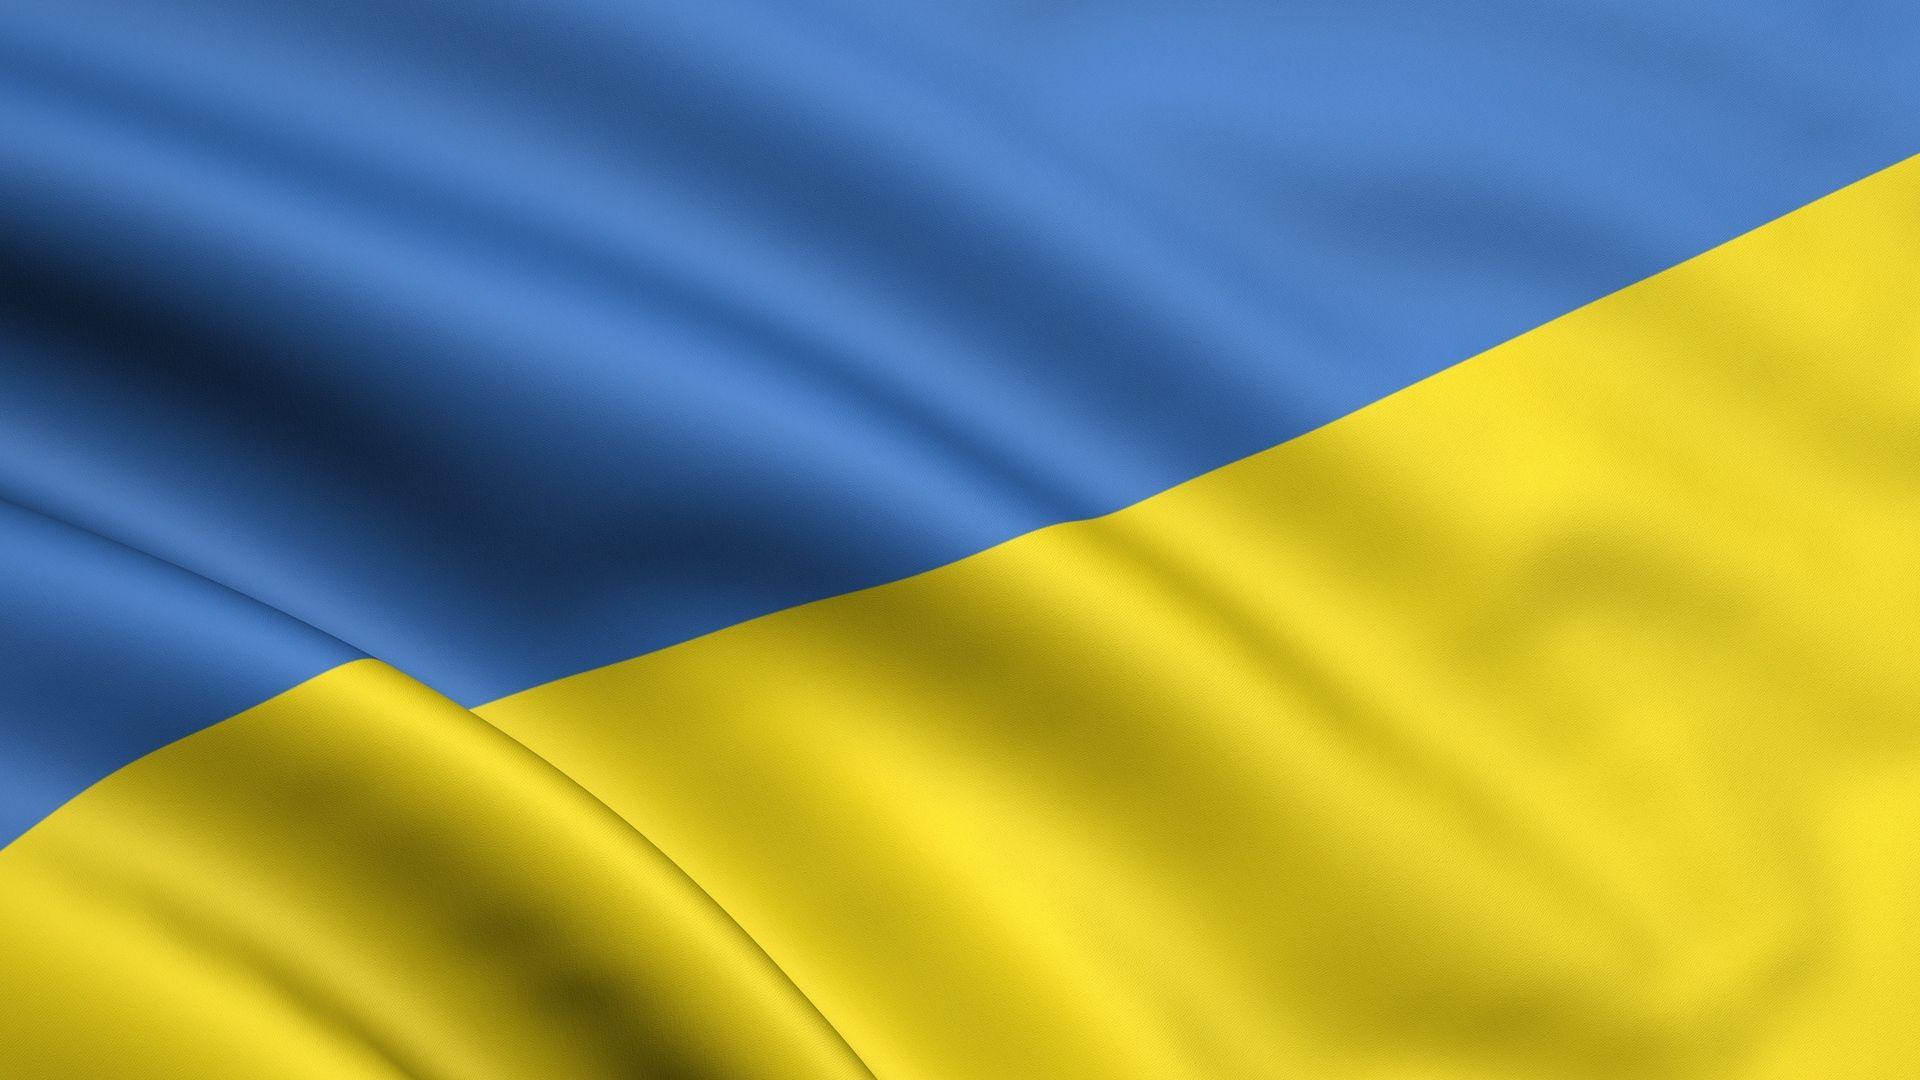 Download wallpaper 1920x1080 yellow, blue, flag, ukraine full HD